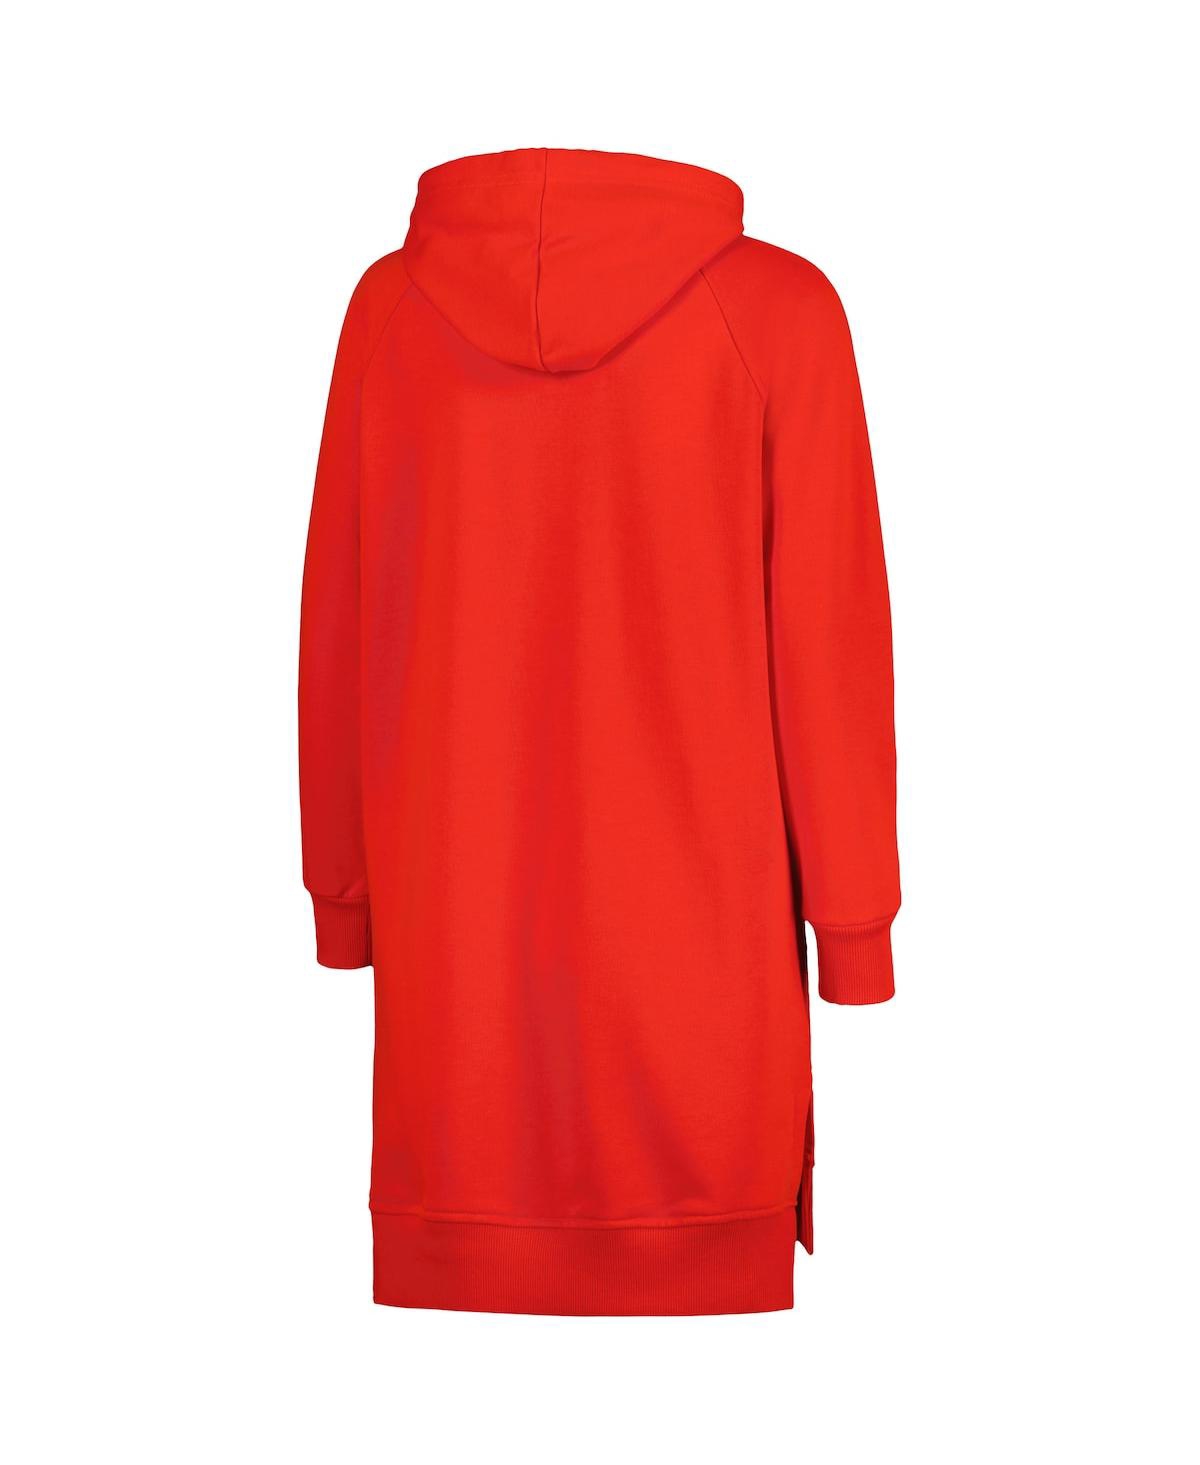 Shop Gameday Couture Women's  Scarlet Ohio State Buckeyes Take A Knee Raglan Hooded Sweatshirt Dress